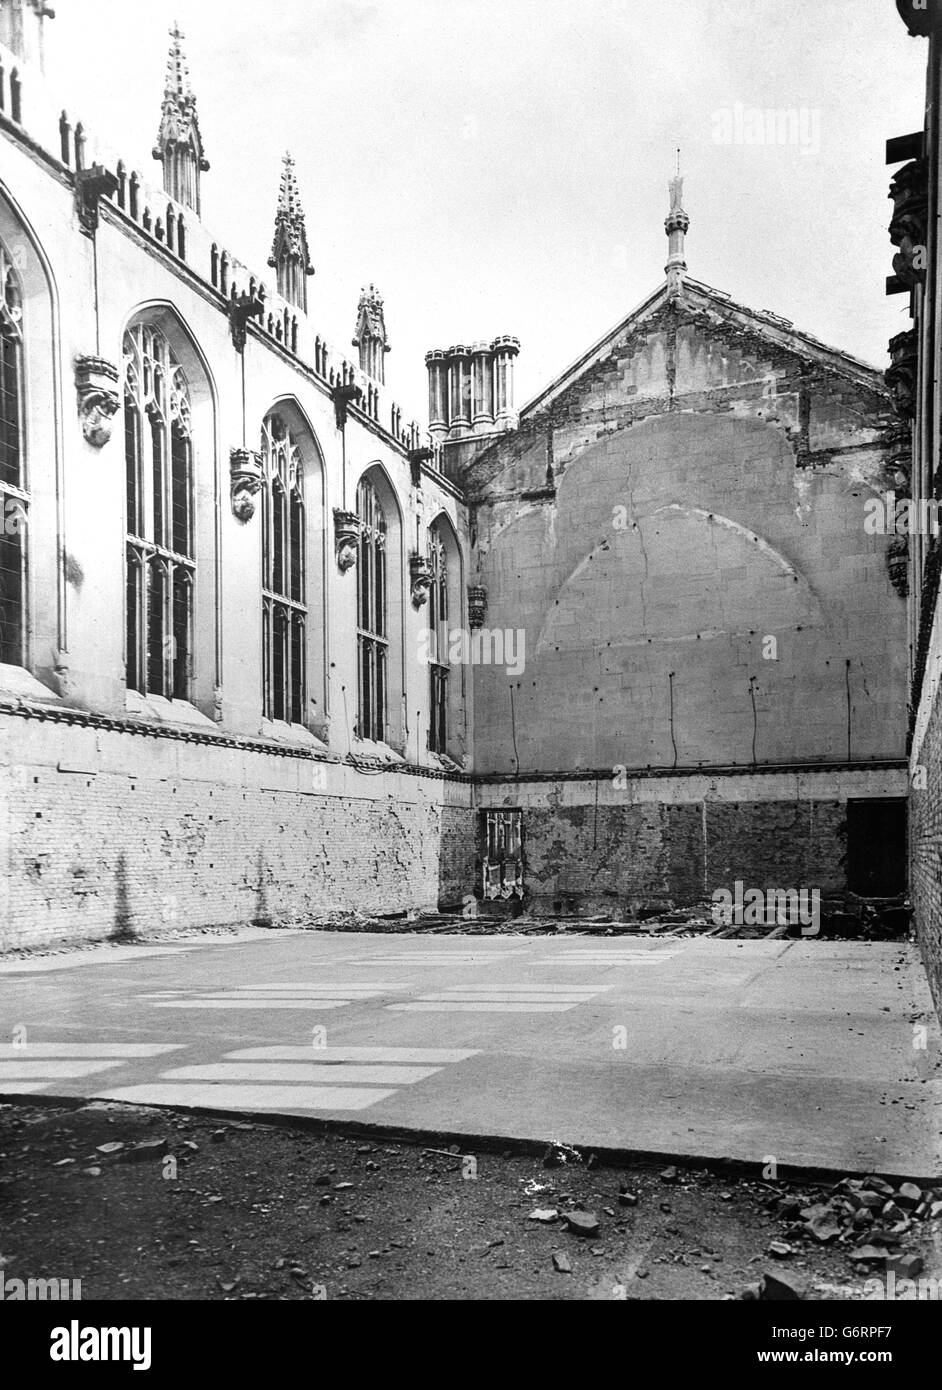 World War Two - The Blitz - Temple Church - London - 1941. The bomb-damaged Temple Church in London. Stock Photo